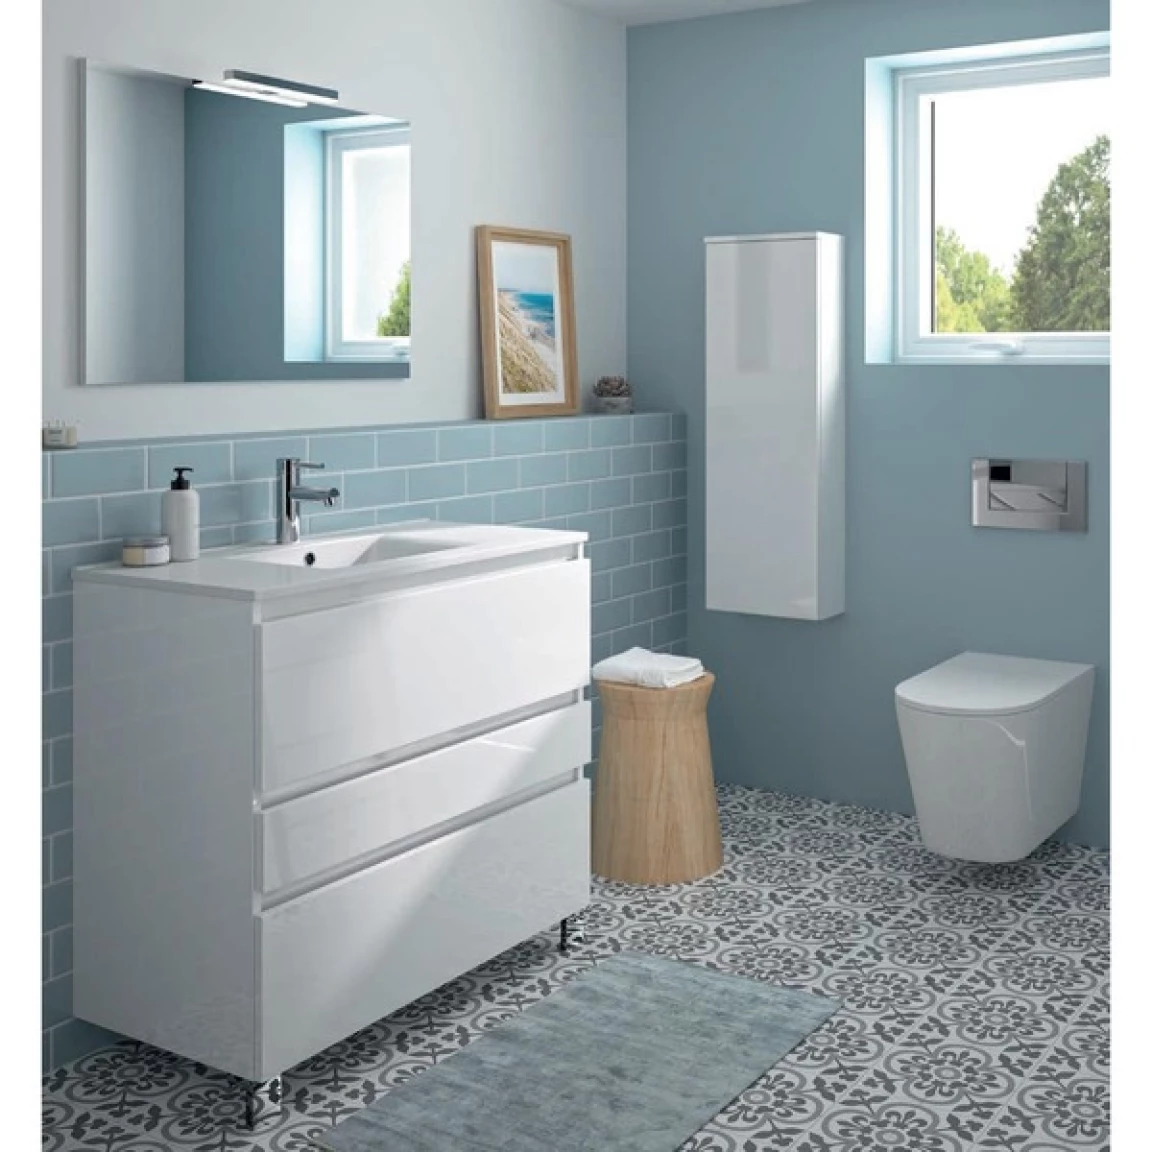 Ensemble meuble de salle de bain CAMPUS 90 cm, plan vasque céramique, profondeur 130 mm, miroir sur plan, béton cendré, 1 grand tiroir